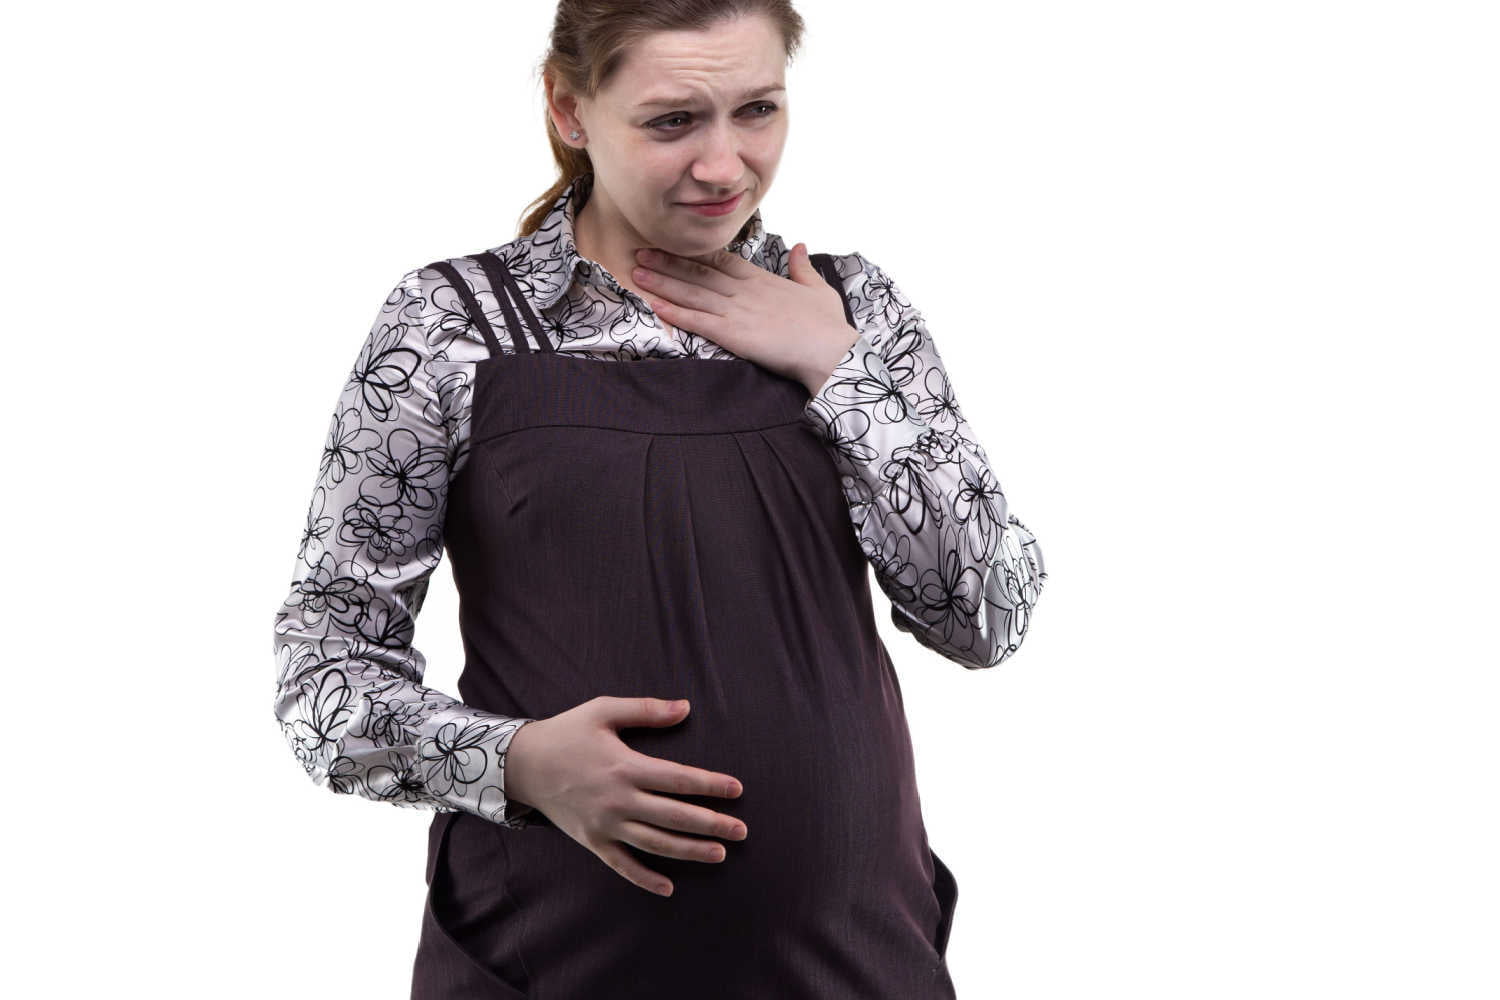 Symptoms of Heartburn During Pregnancy